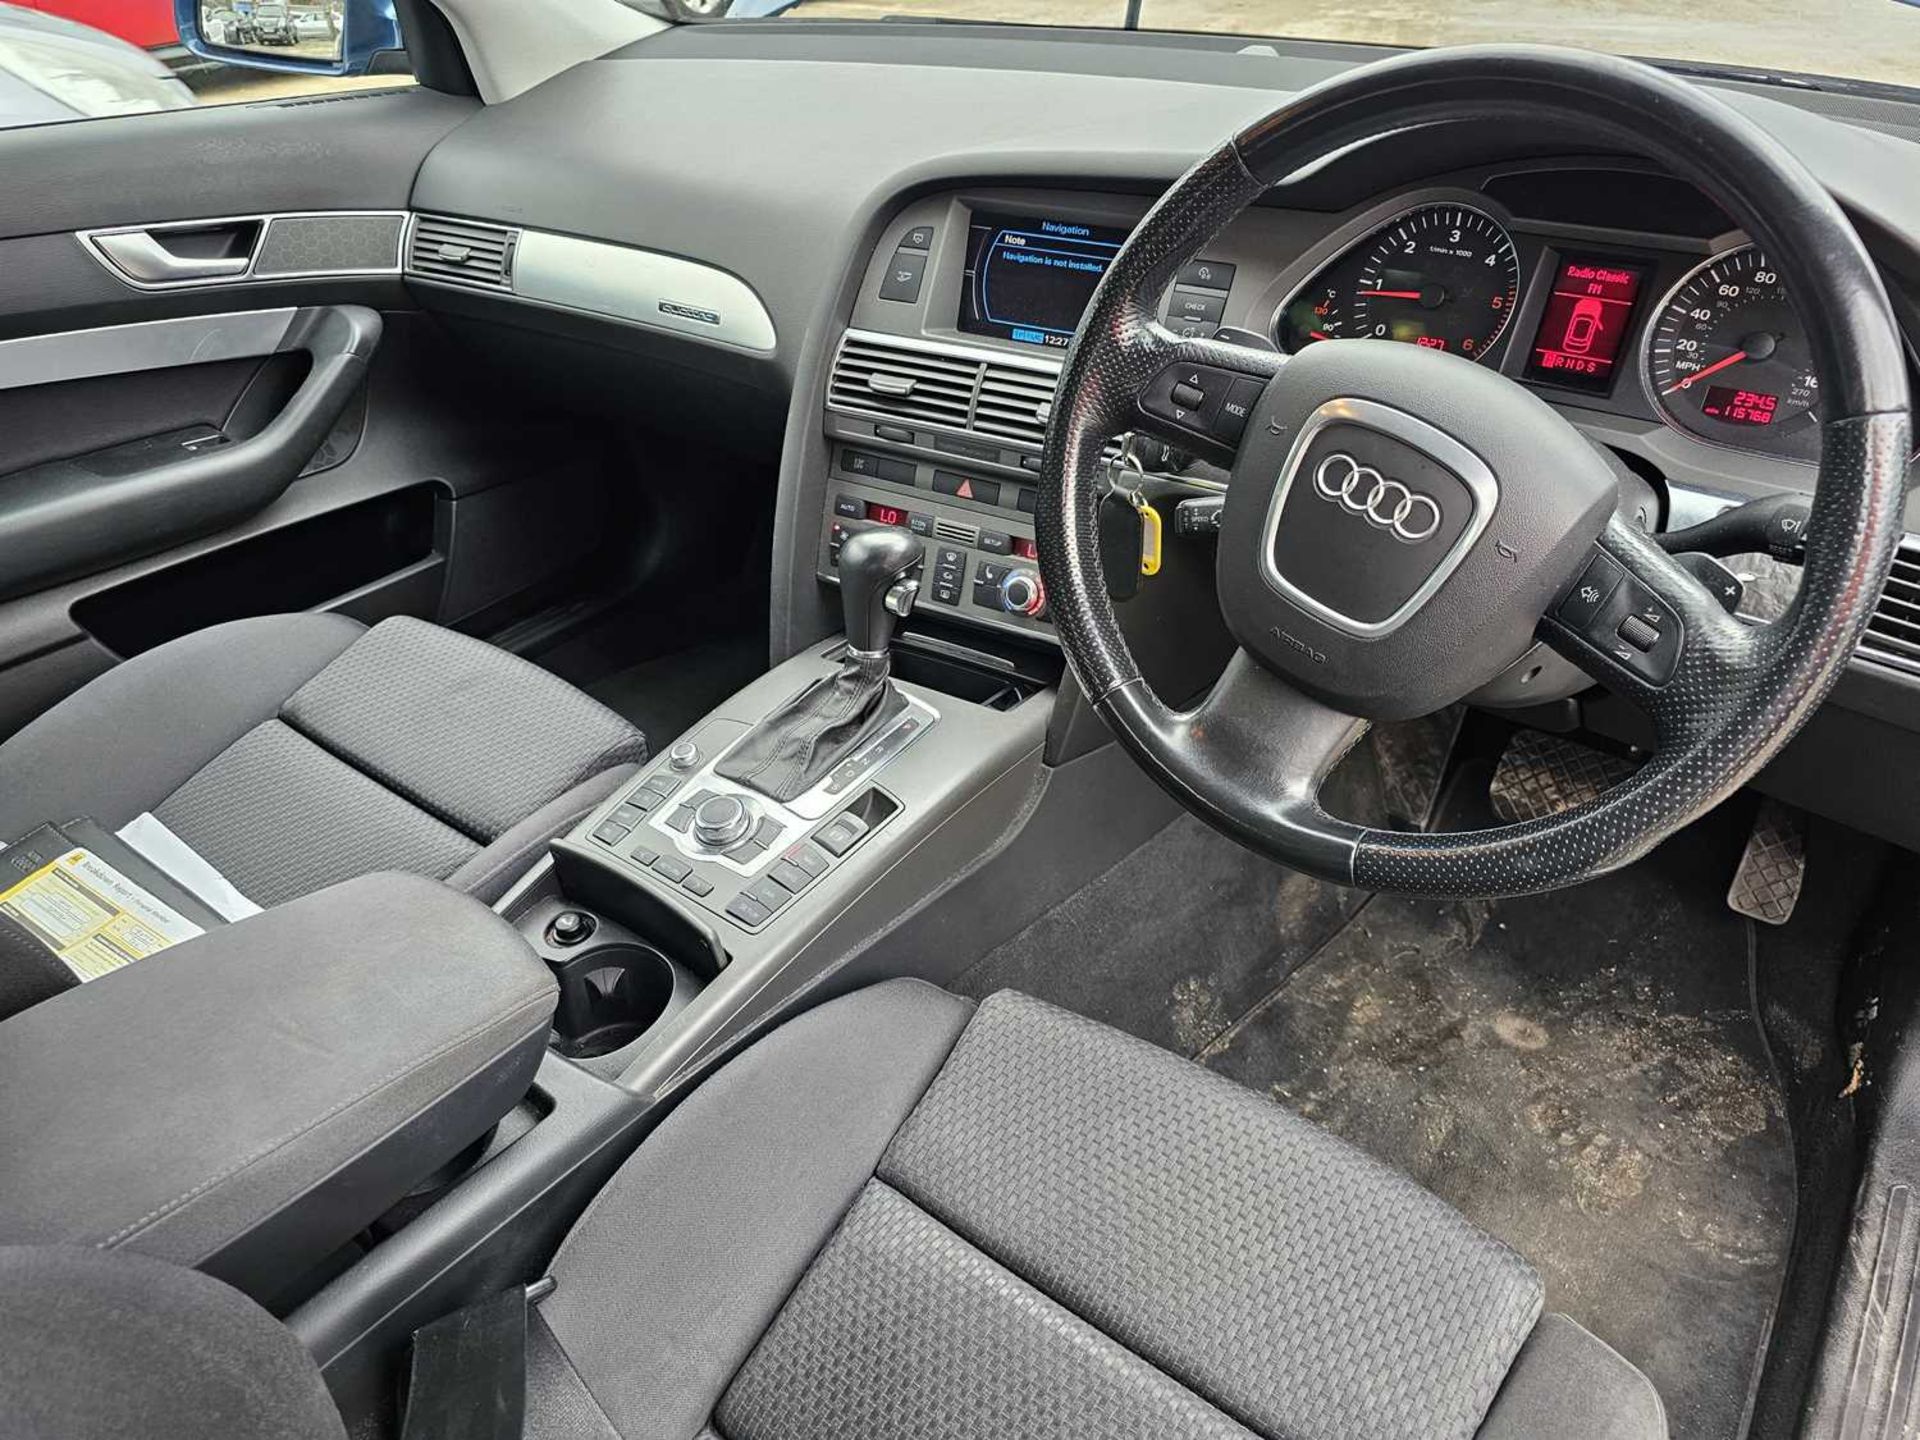 2004 Audi A6 3.0 TDi Quattro, Auto, Paddle Shift, Parking Sensors, Heated Seats, Bluetooth, Cruise C - Image 19 of 28